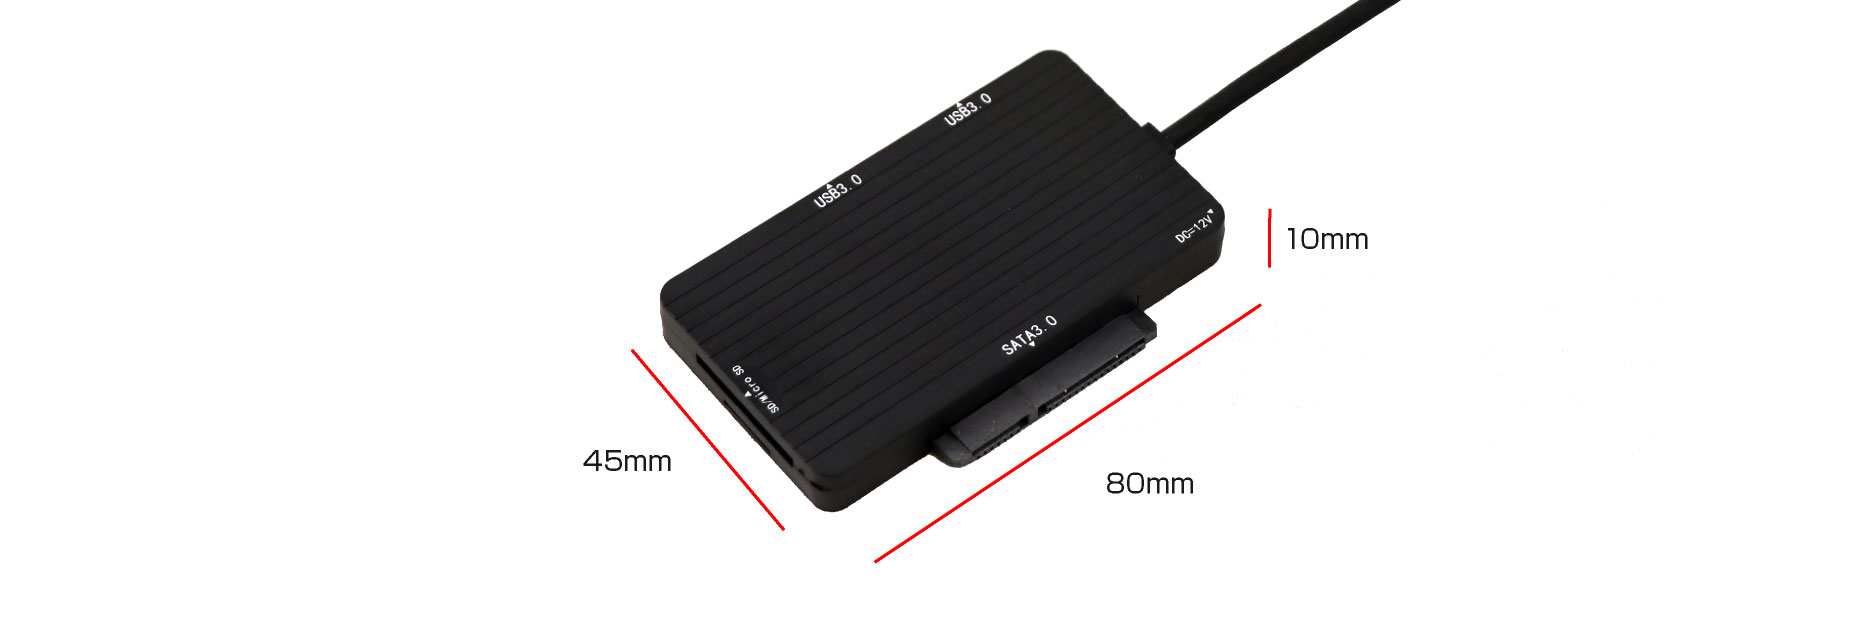 SDカードリーダー&ハブ機能搭載 2.5型/3.5型SATA HDD/SSD変換アダプタ USB3.1Gen1（USB3.0）USB2.0接続 UASPモードアオテック製品 AOK-HDUSB-U3AD アイティプロテック